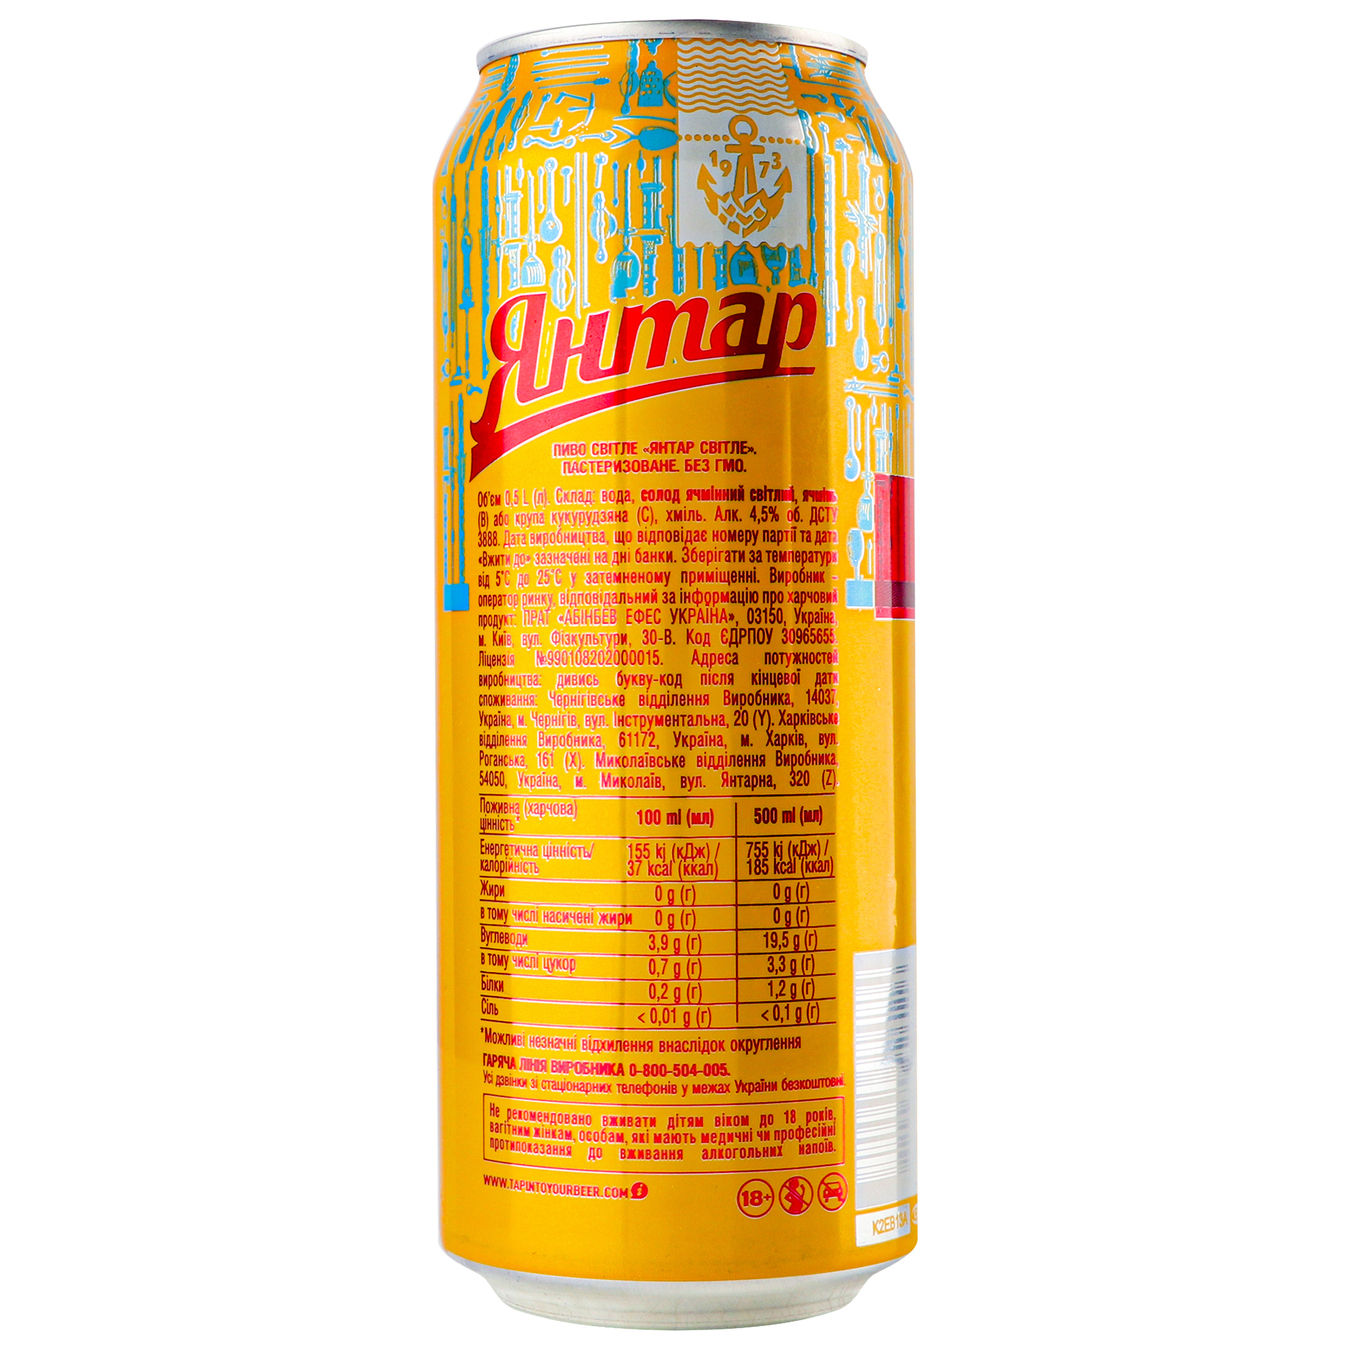 Light beer Yantar 4.5% 0.5l can 4